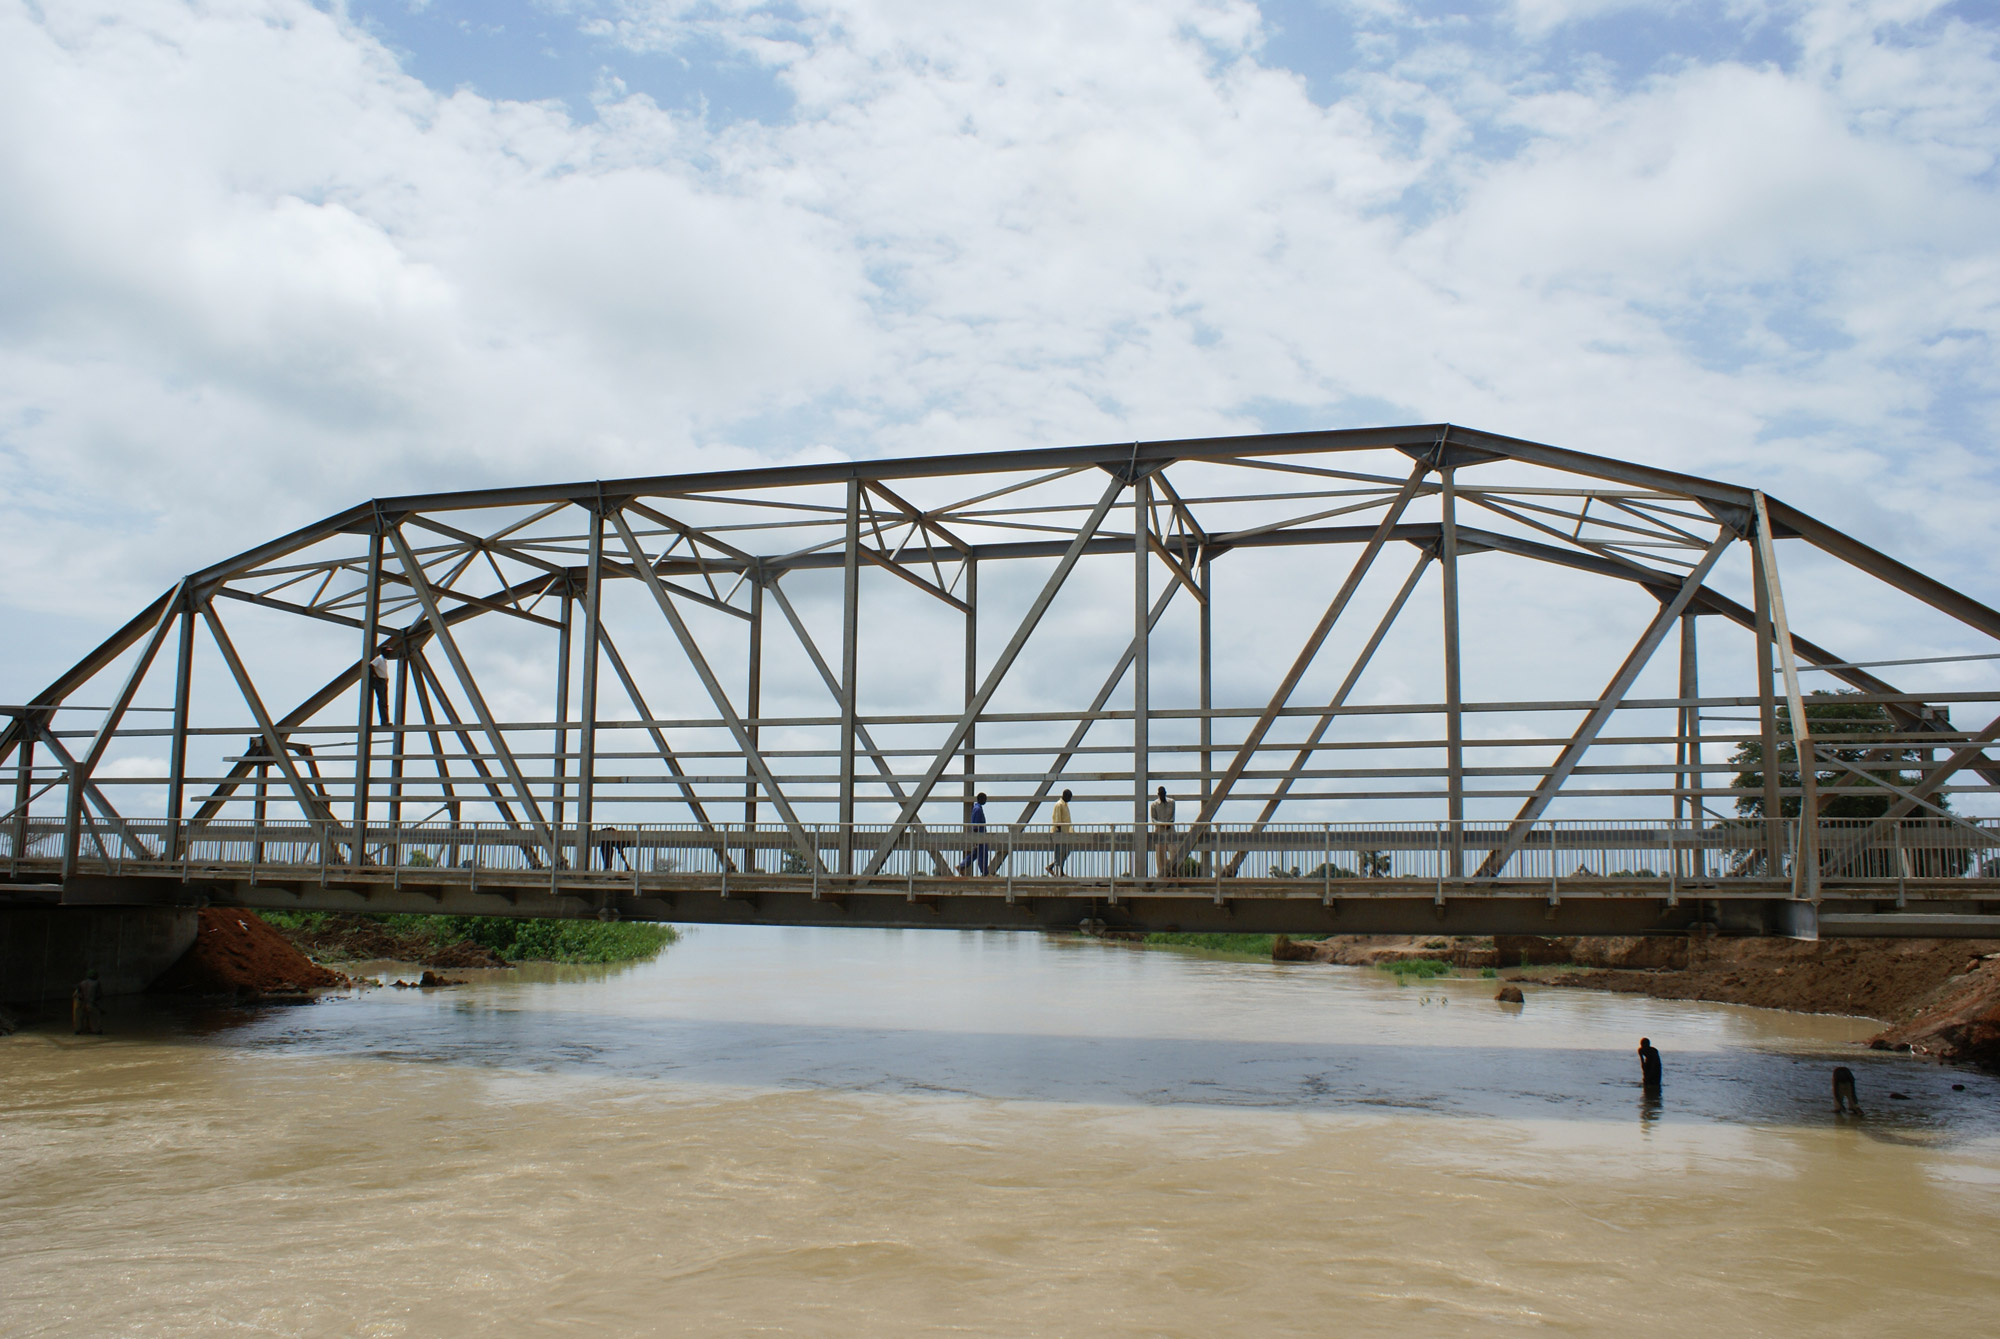 50m Span Bridge, Sudan - Road & Highway Steel Bridge Construction ...